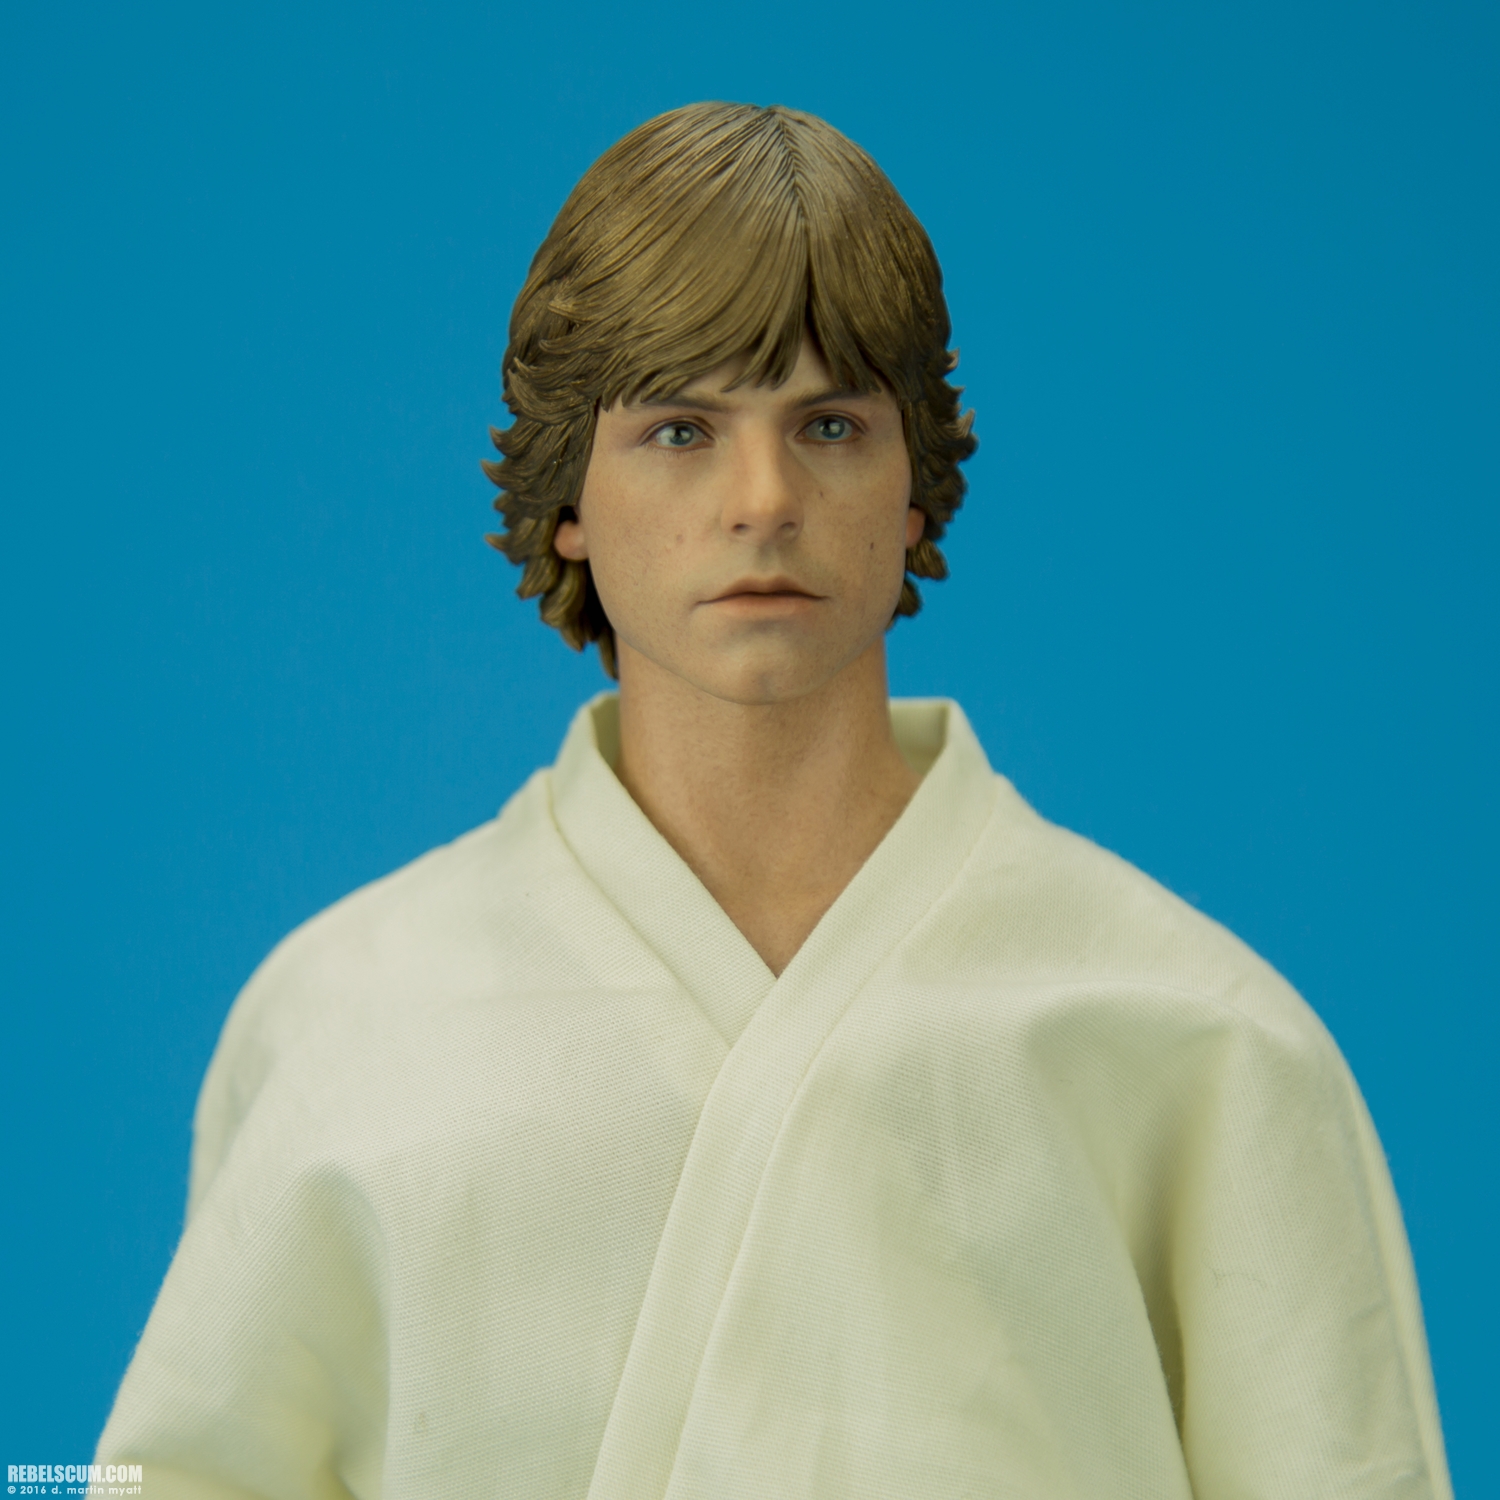 Luke-Skywalker-MMS297-Hot-Toys-Star-Wars-A-New-Hope-021.jpg